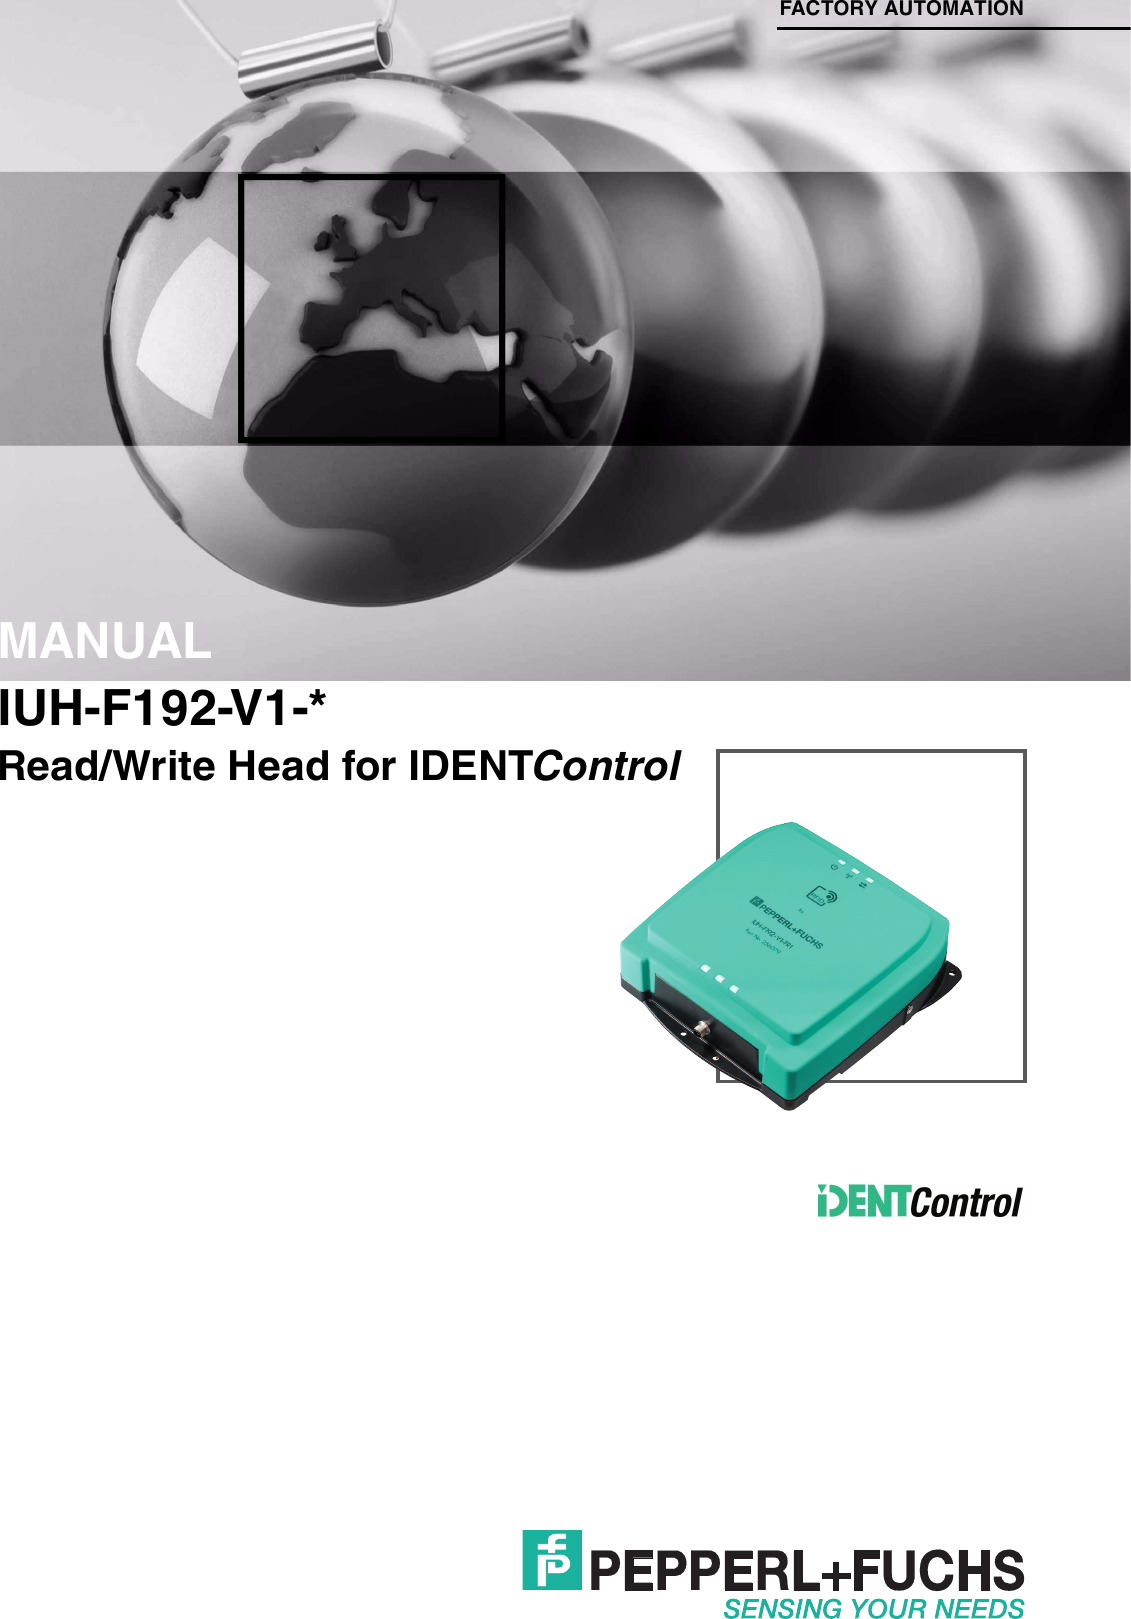 IUH-F192-V1-*Read/Write Head for IDENTControlFACTORY AUTOMATIONMANUAL